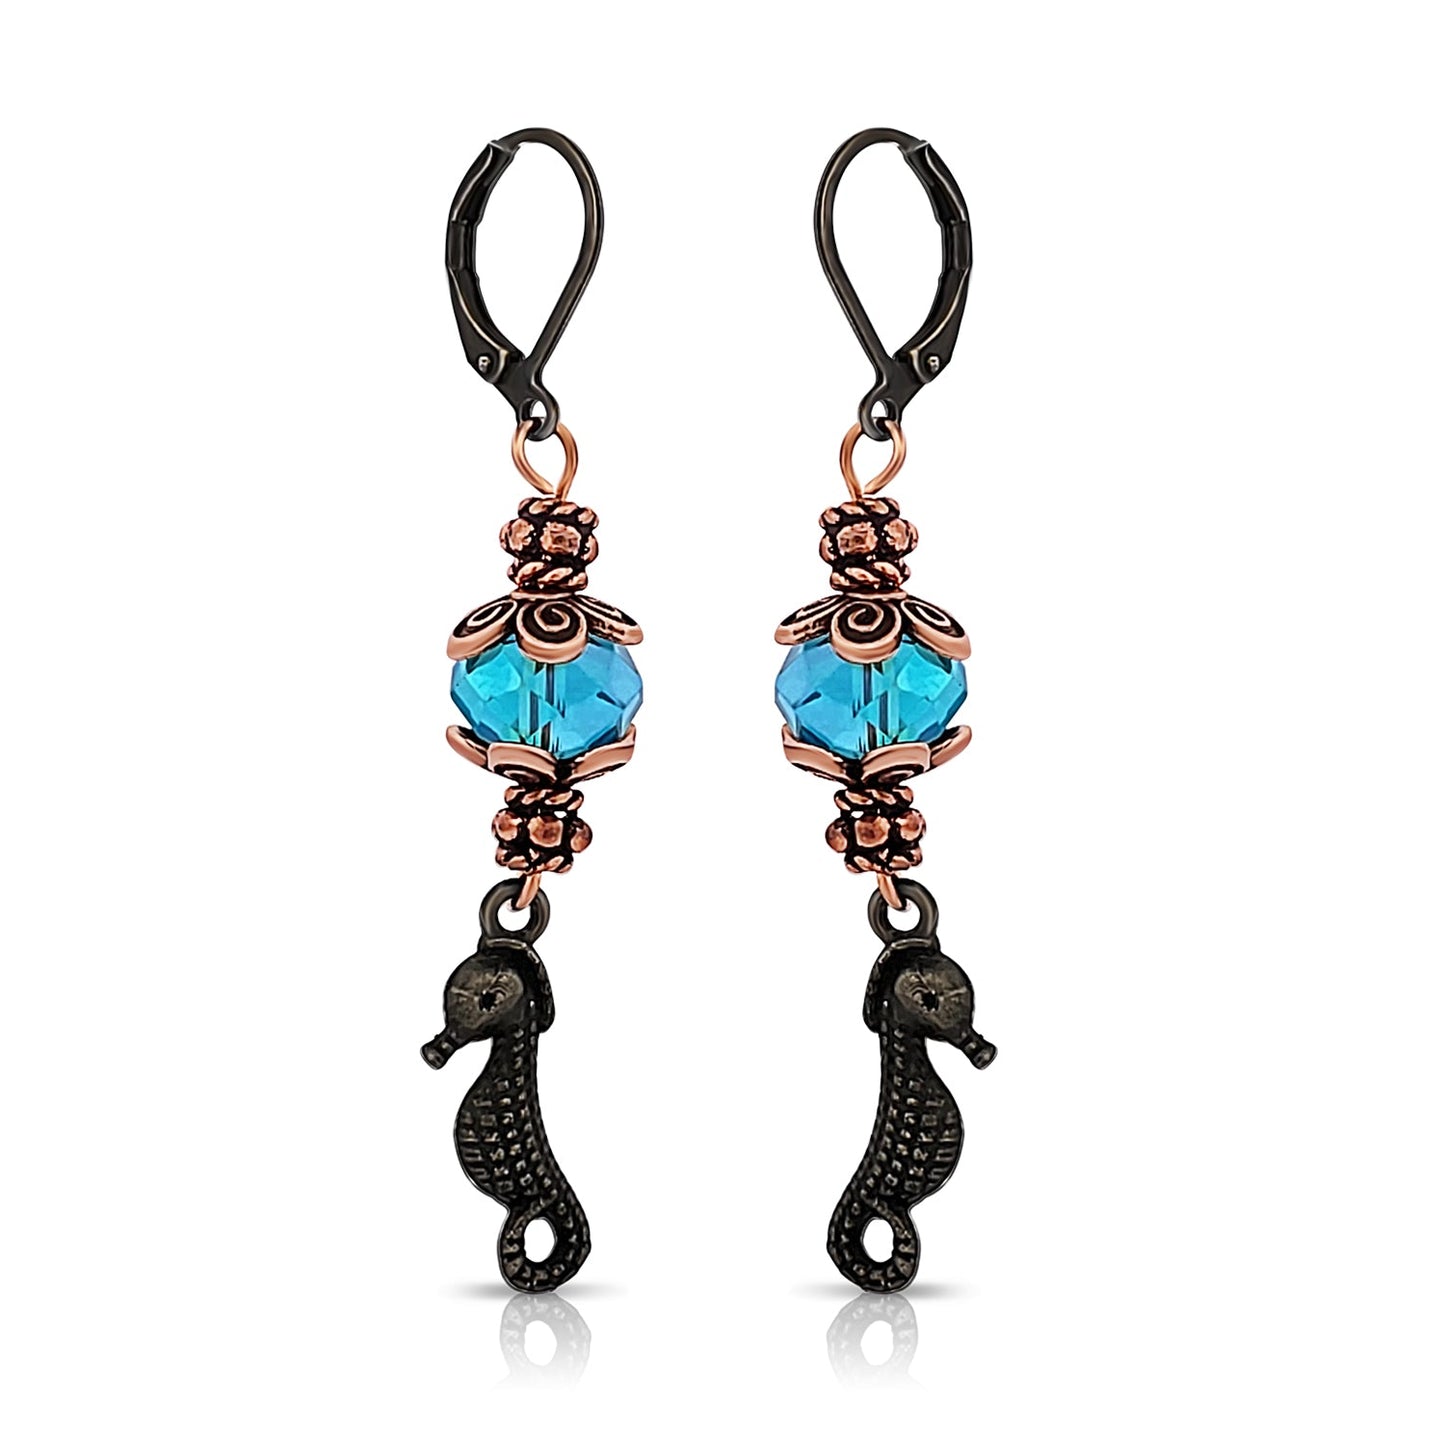 BESHEEK Copper and Blue Crystal Seahorse Dangle Earrings | Handmade Hypoallergenic Boho Beach Gala Wedding Style Fashion Earrings